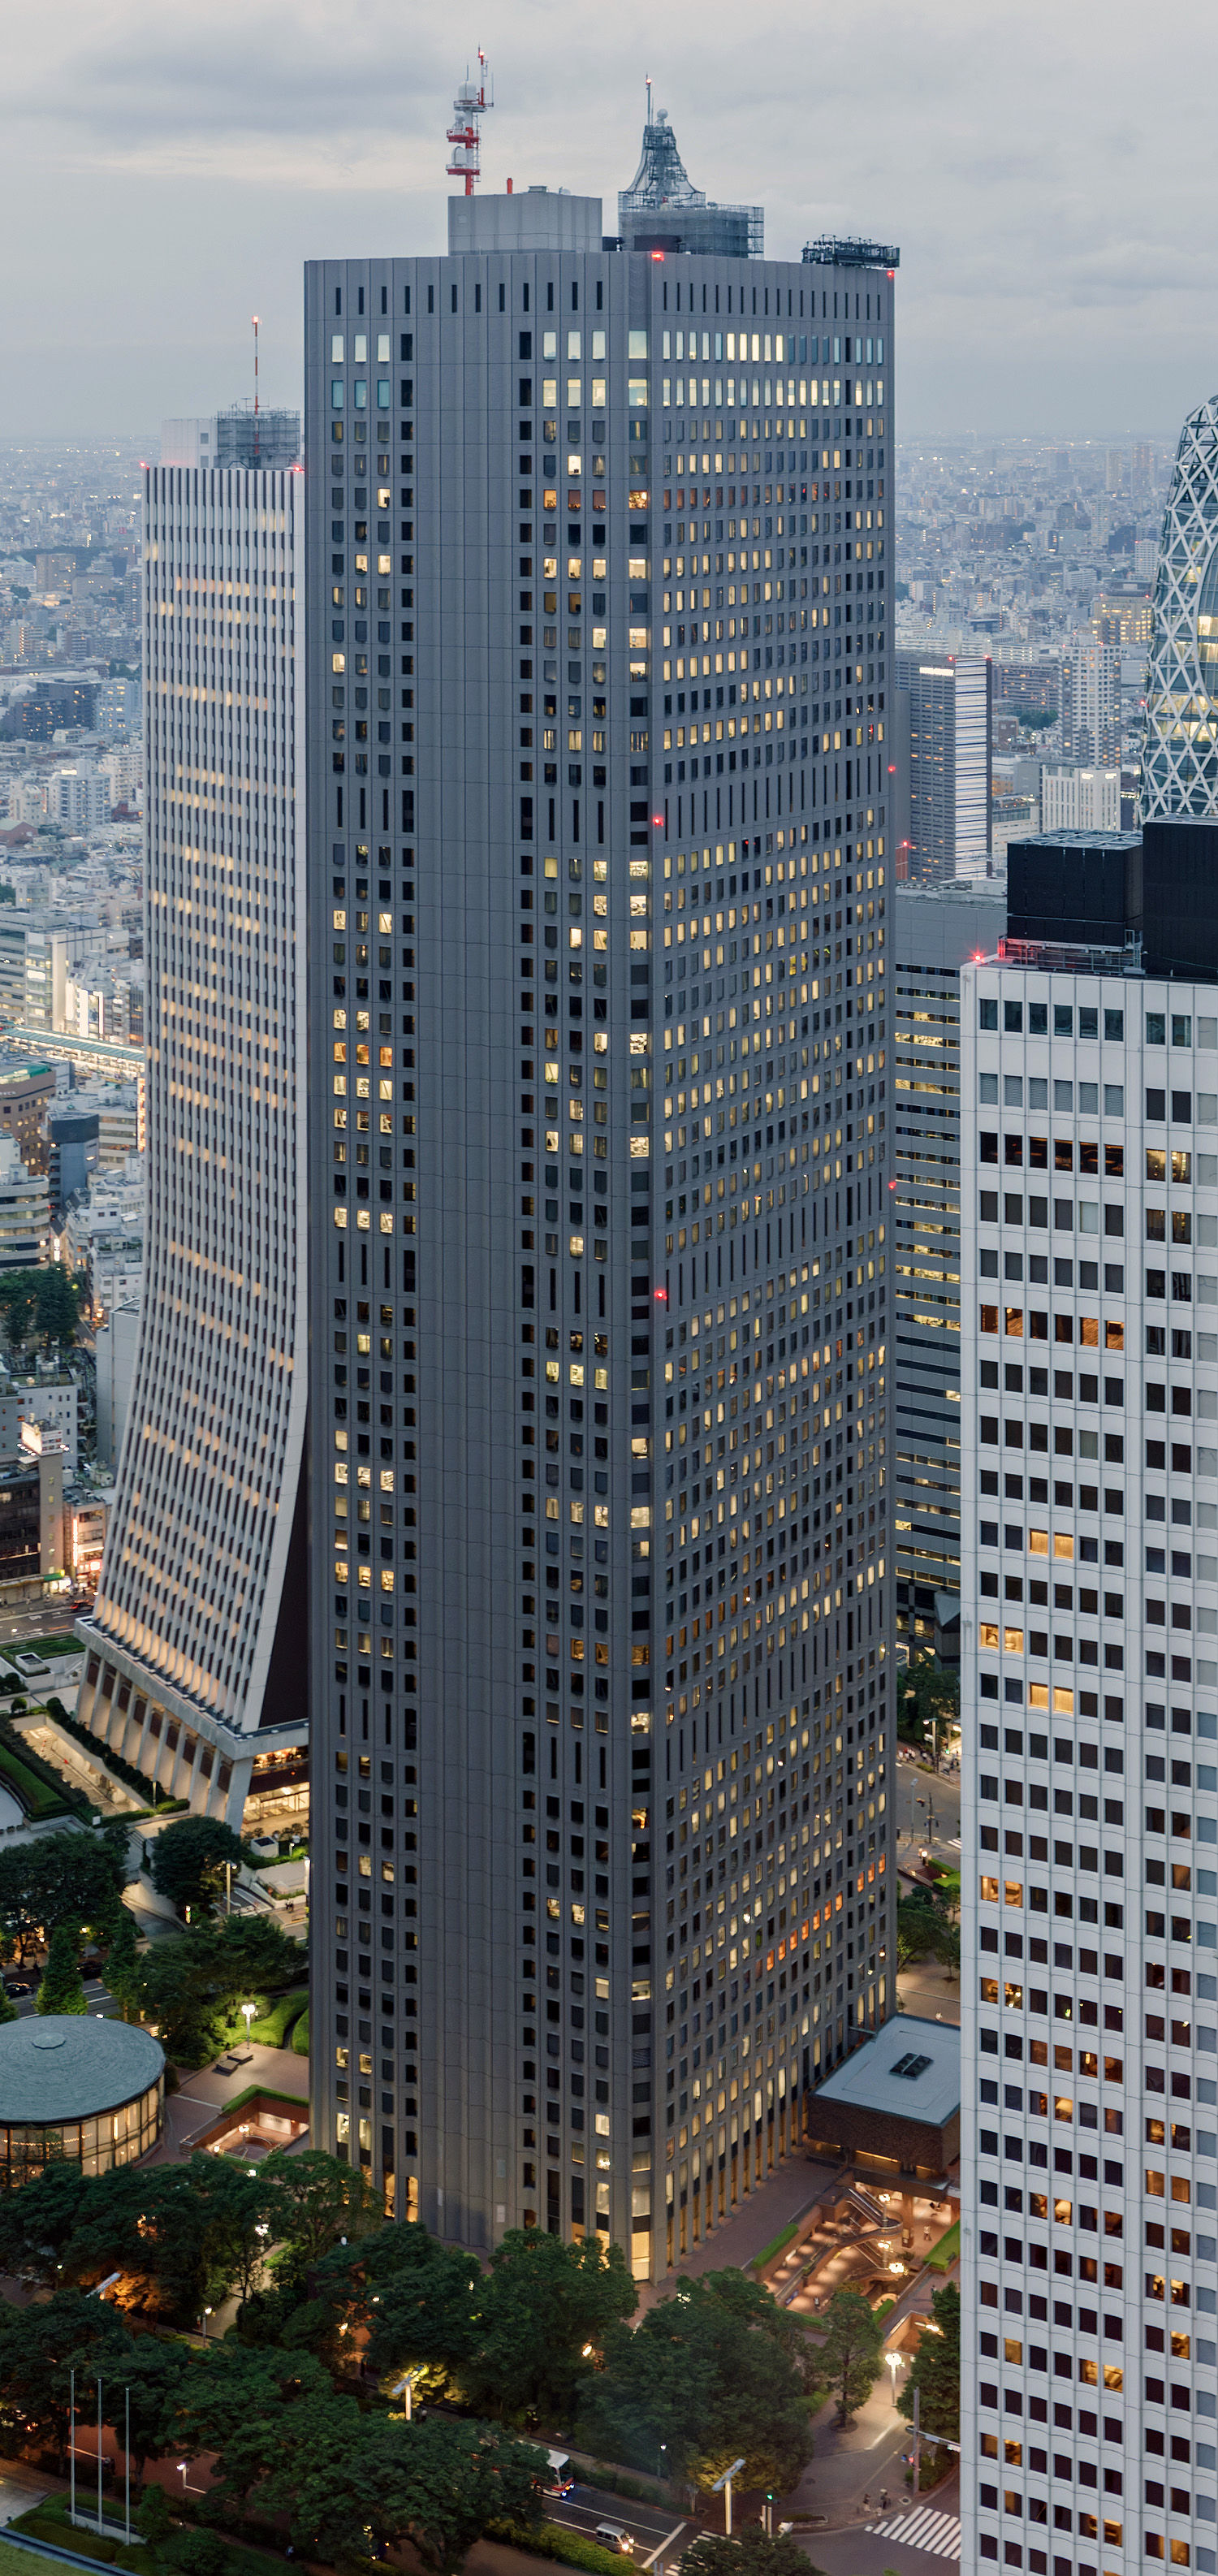 Shinjuku Center Building, Tokyo - View from Tokyo Metropolitan Government Building. © Mathias Beinling